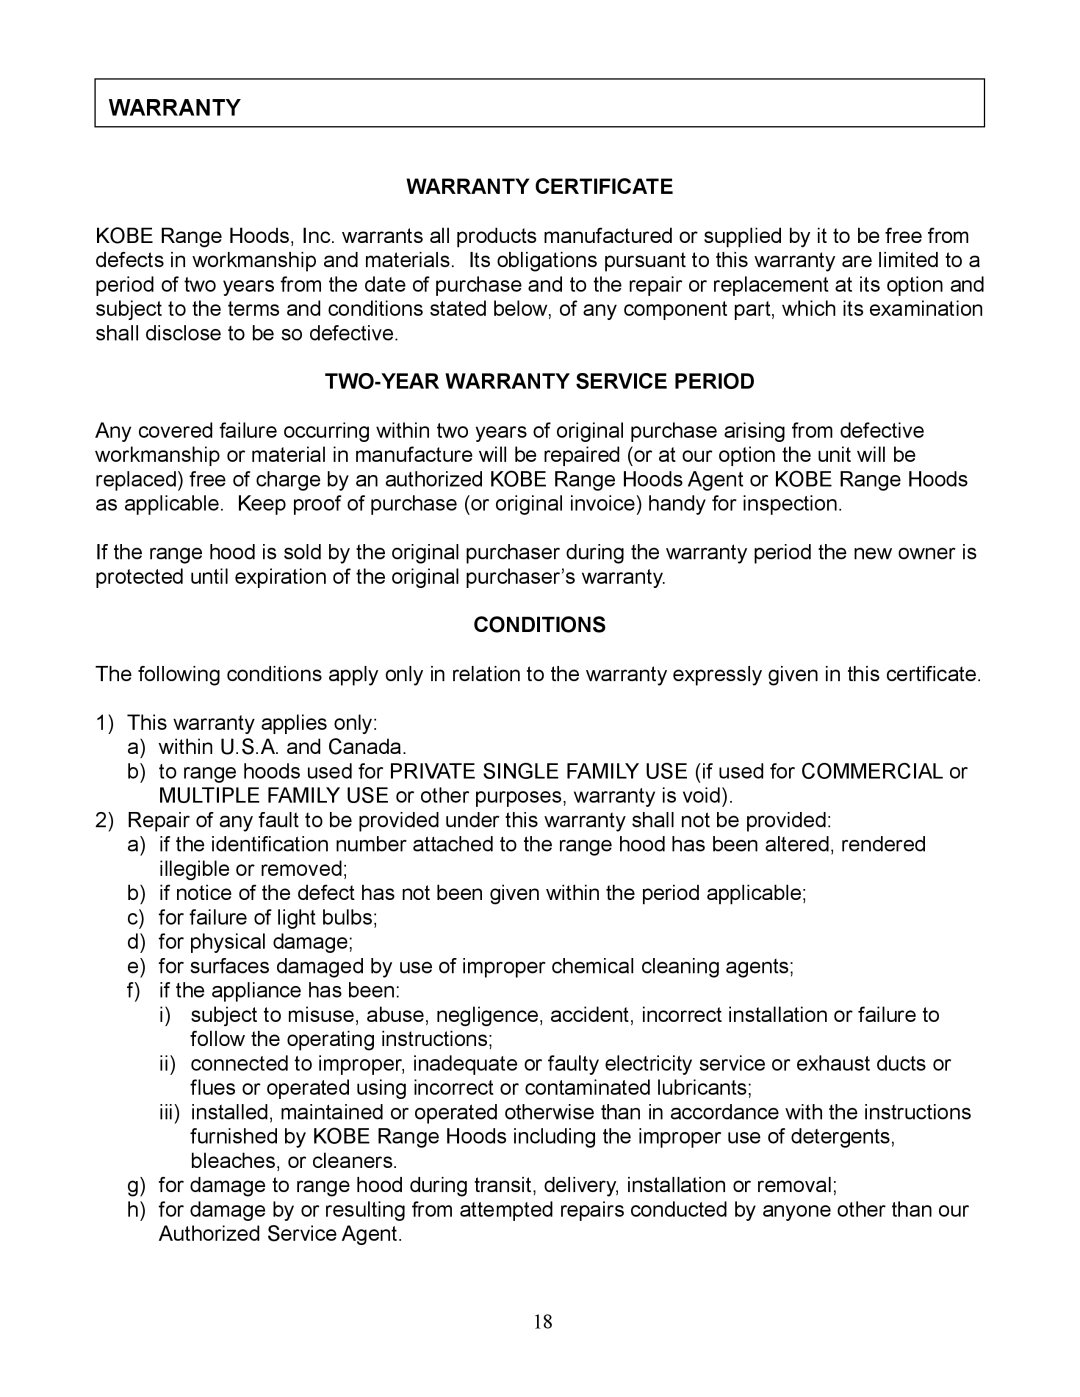 Kobe Range Hoods RA9236SQ manual Warranty Certificate, TWO-YEAR Warranty Service Period, Conditions 